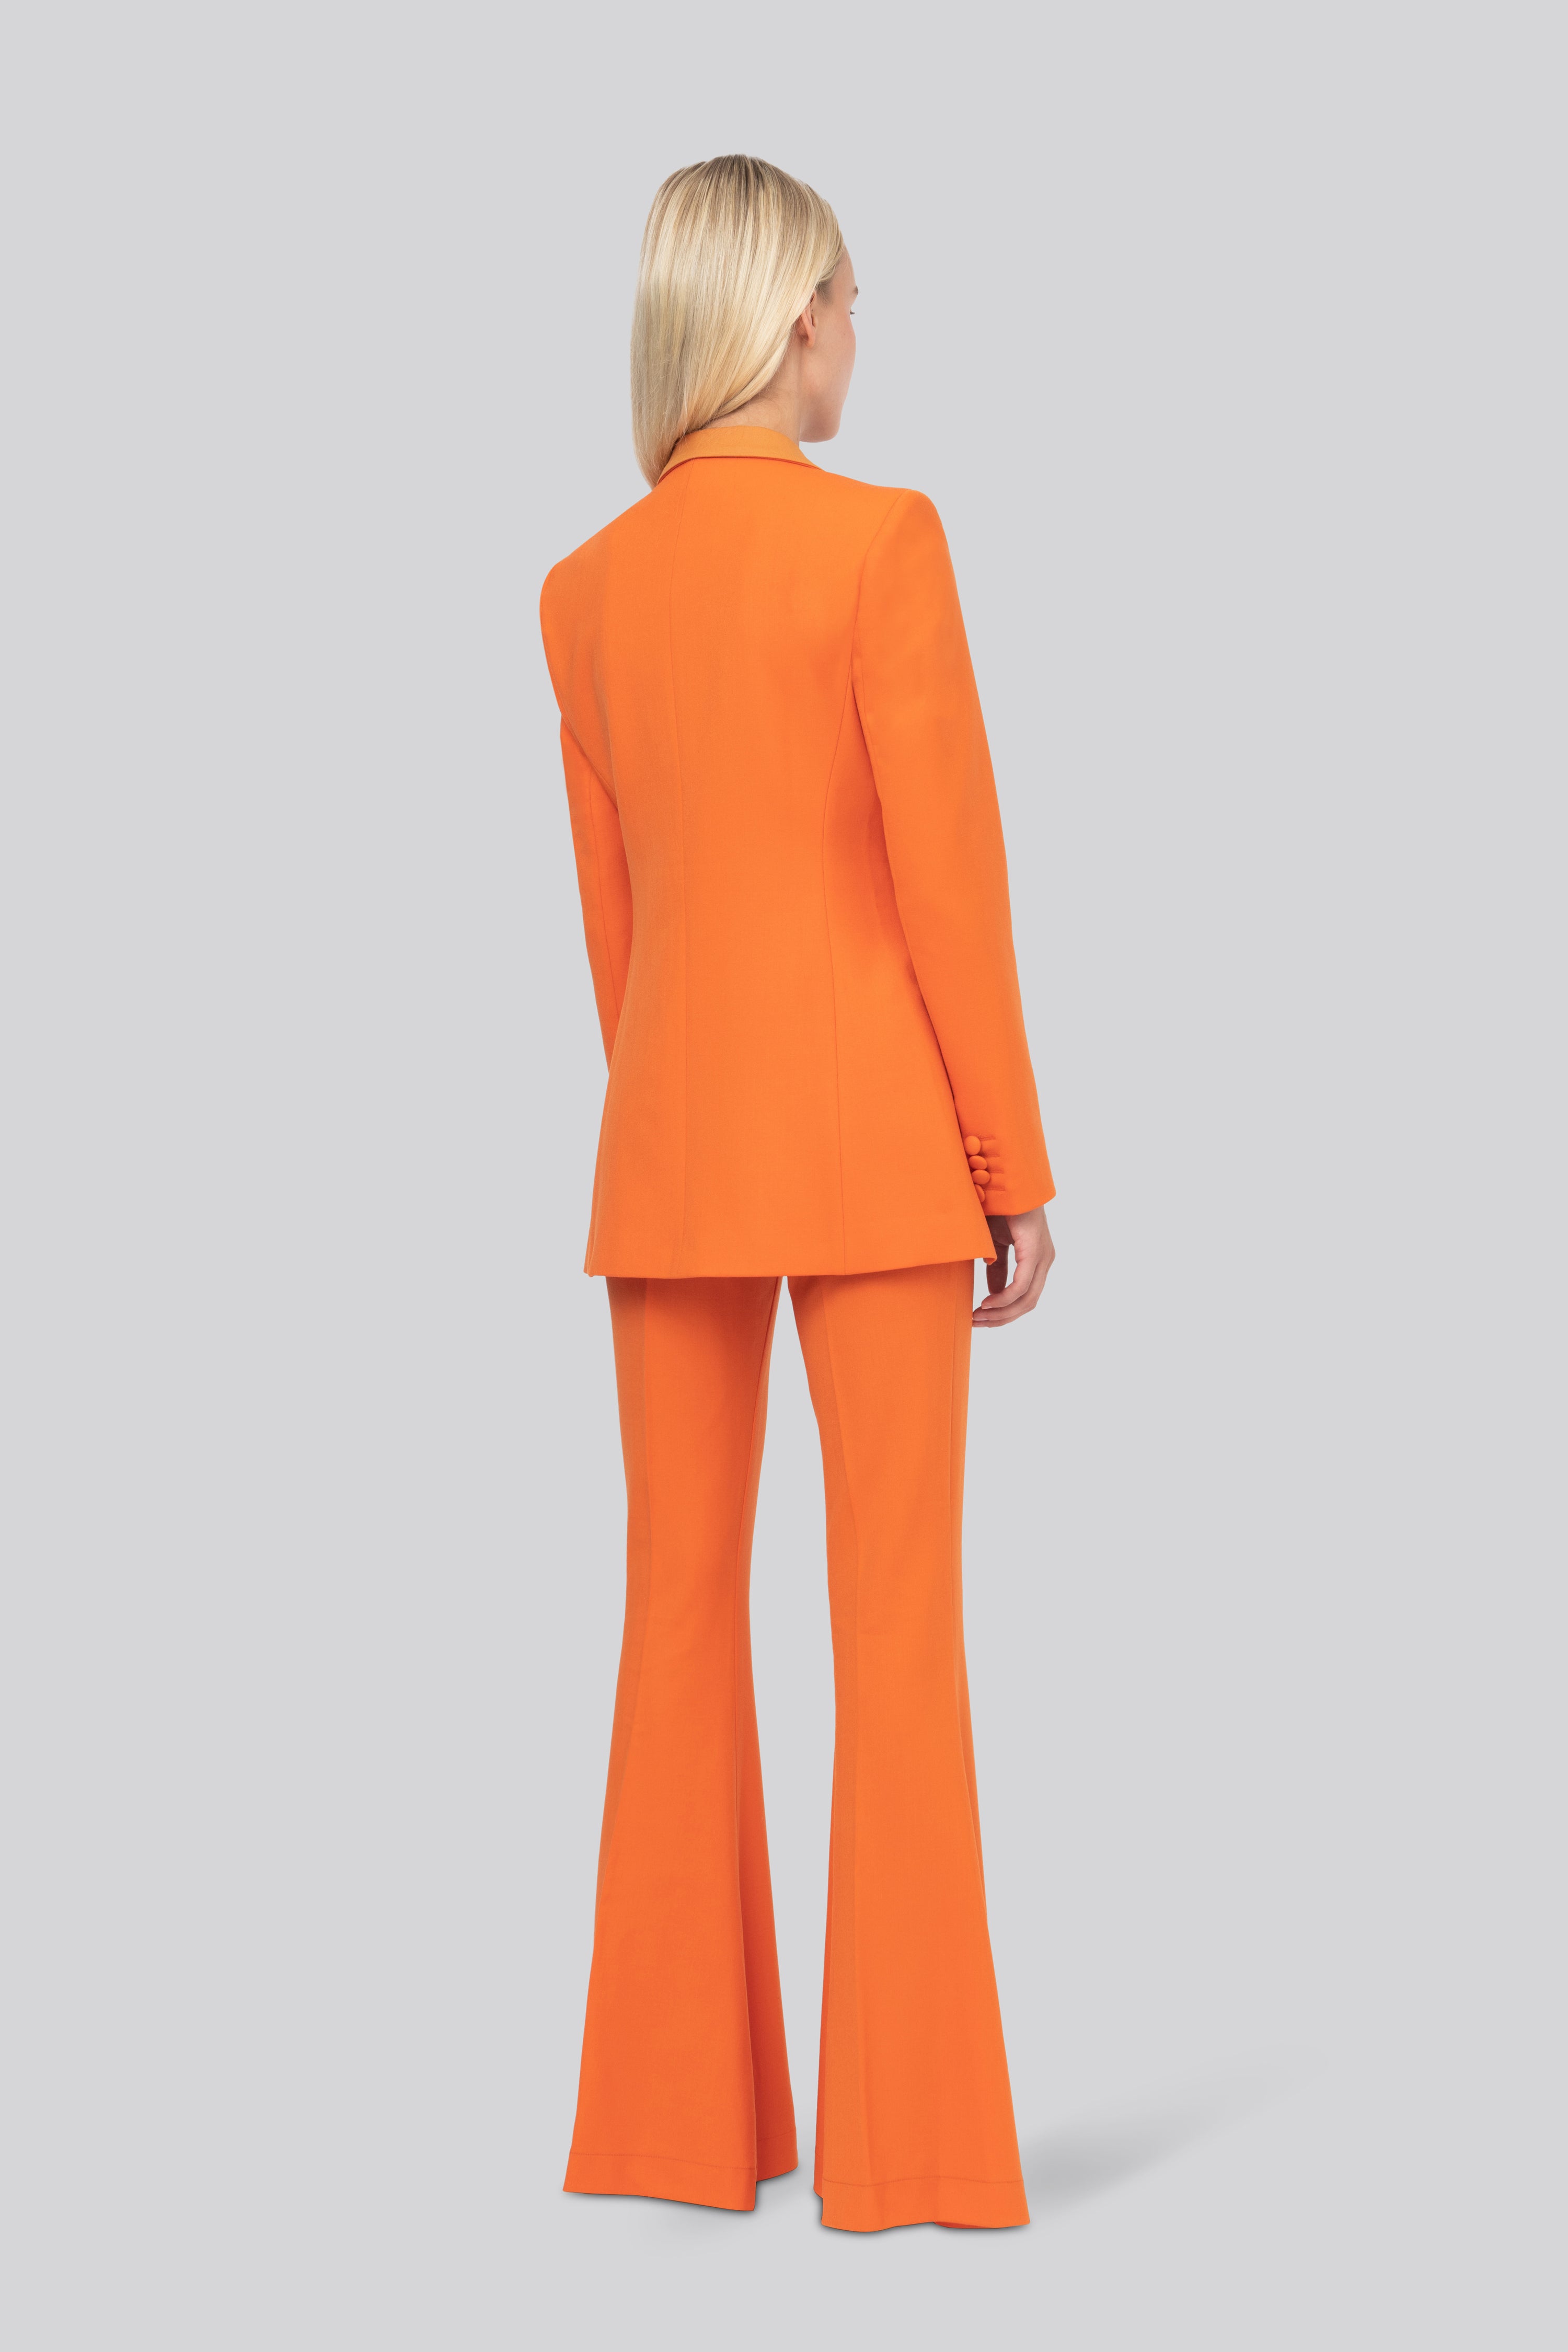 The Orange & Brick Wool Bianca Blazer